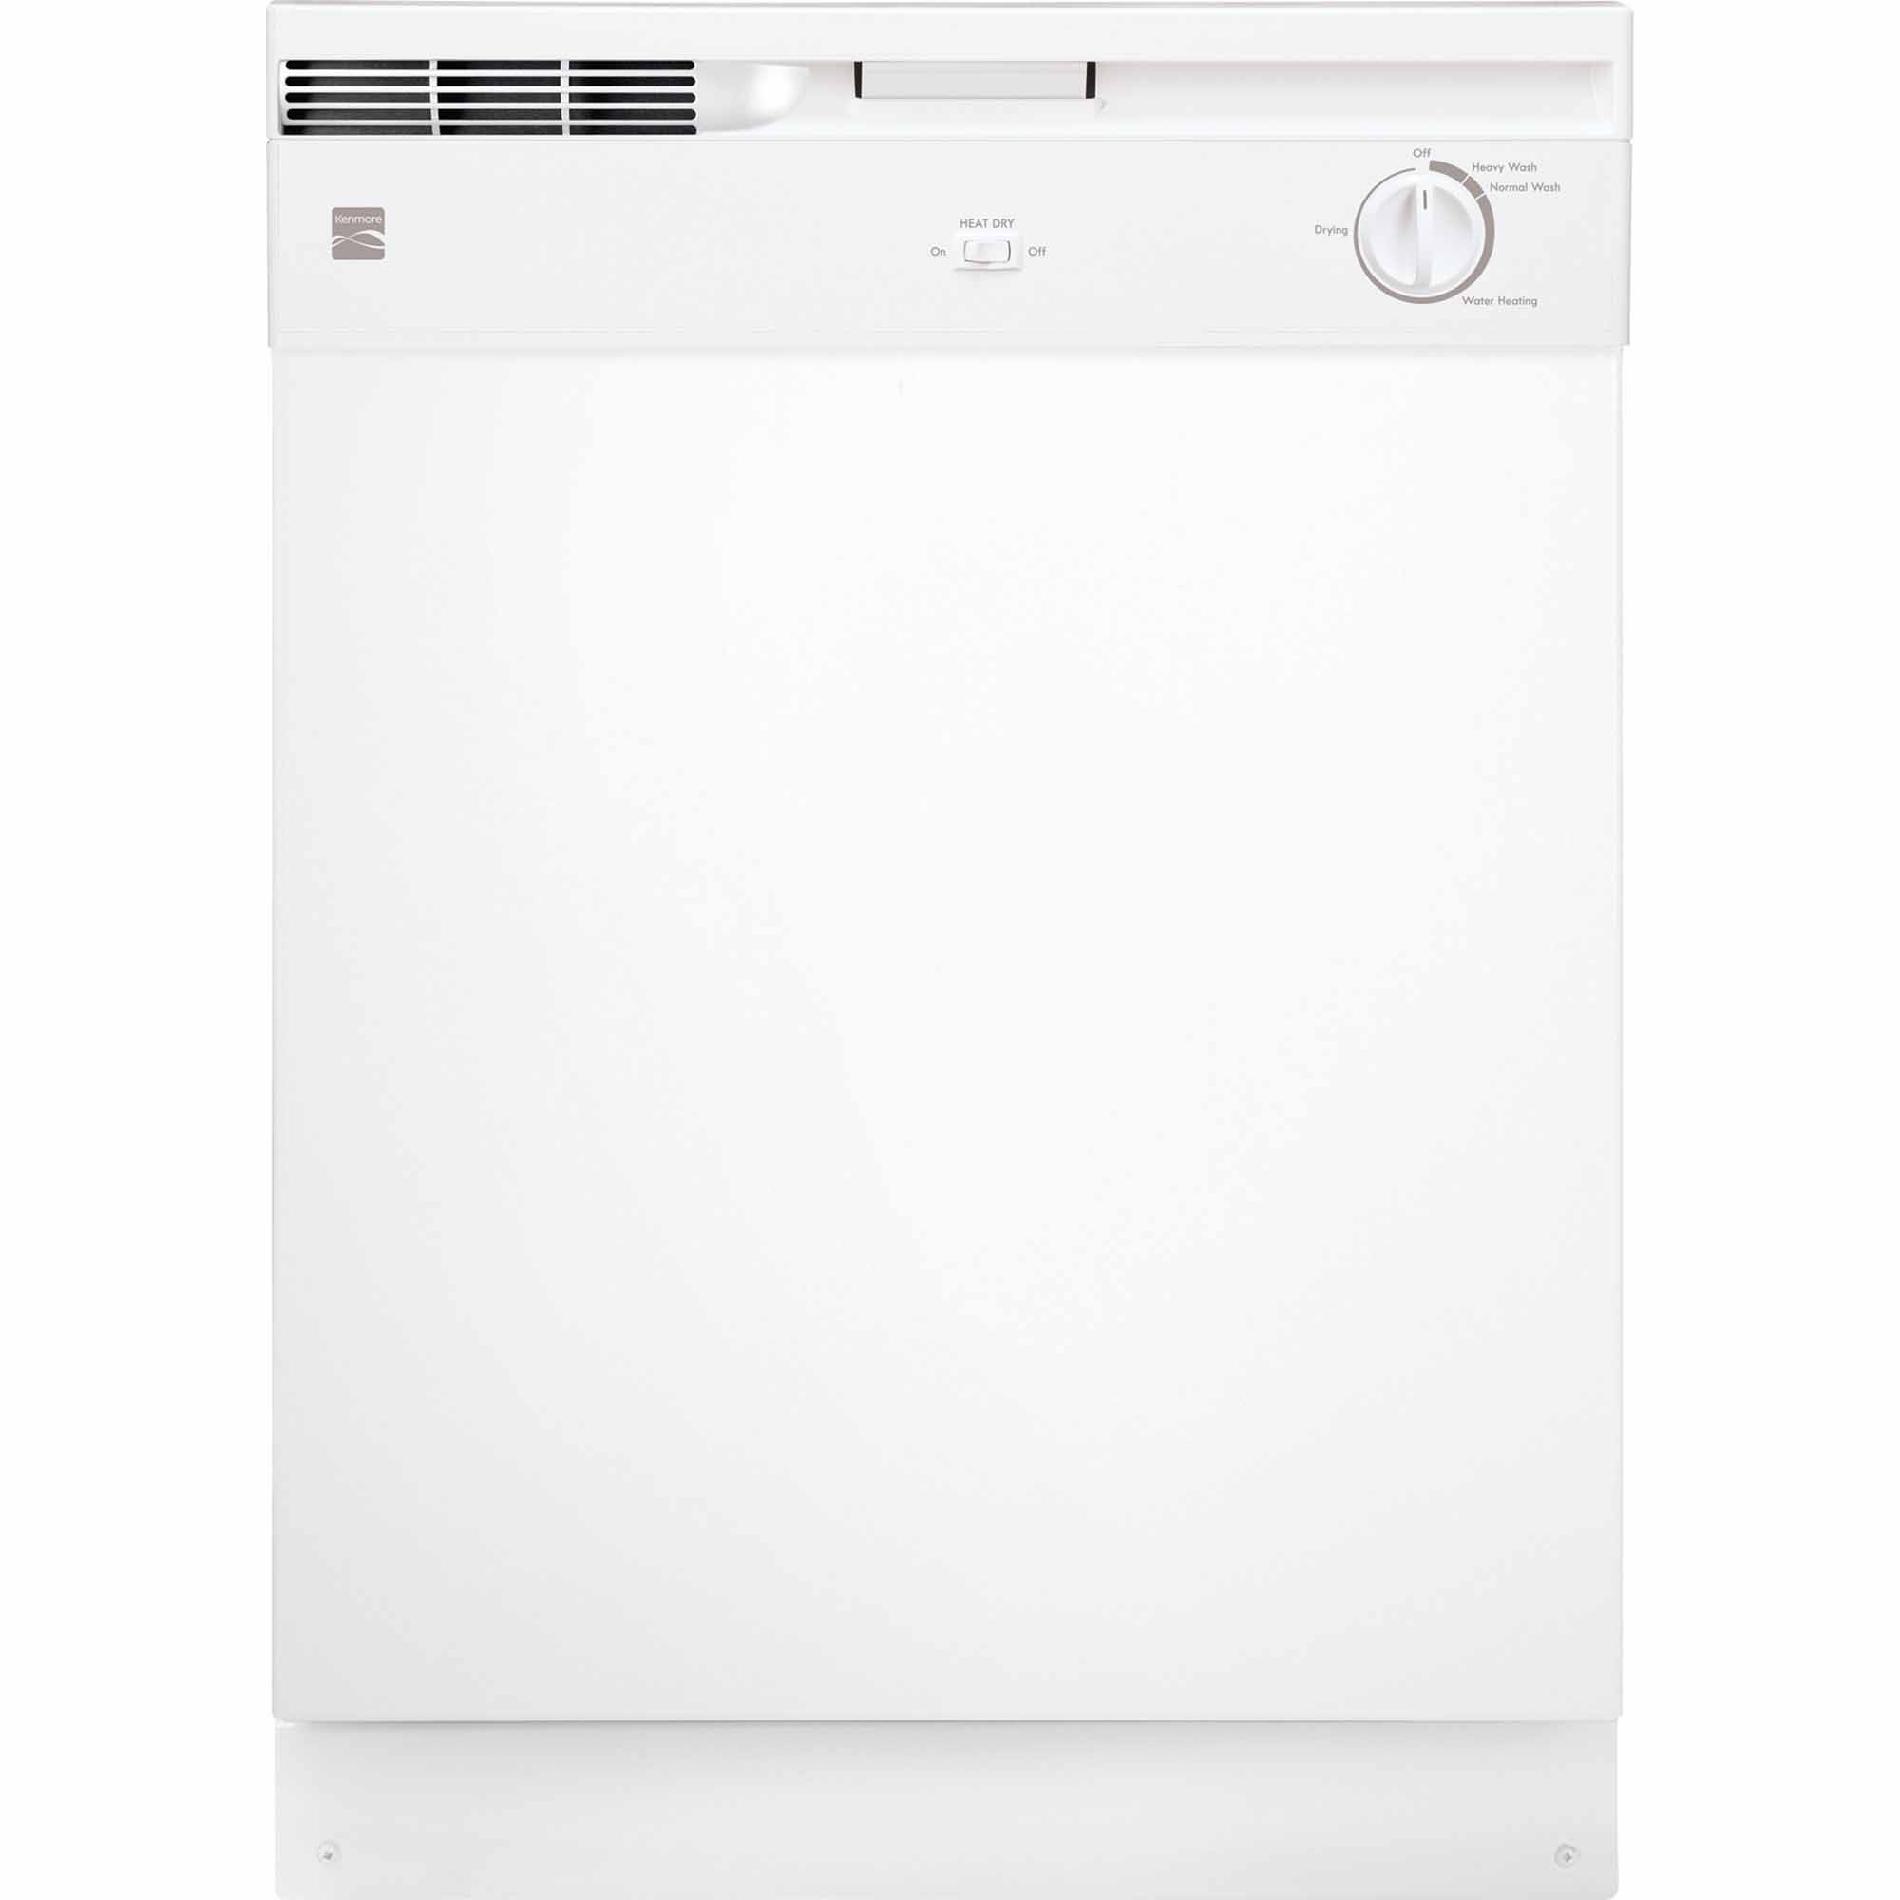 Kenmore 14012 24 Built-In Dishwasher - White